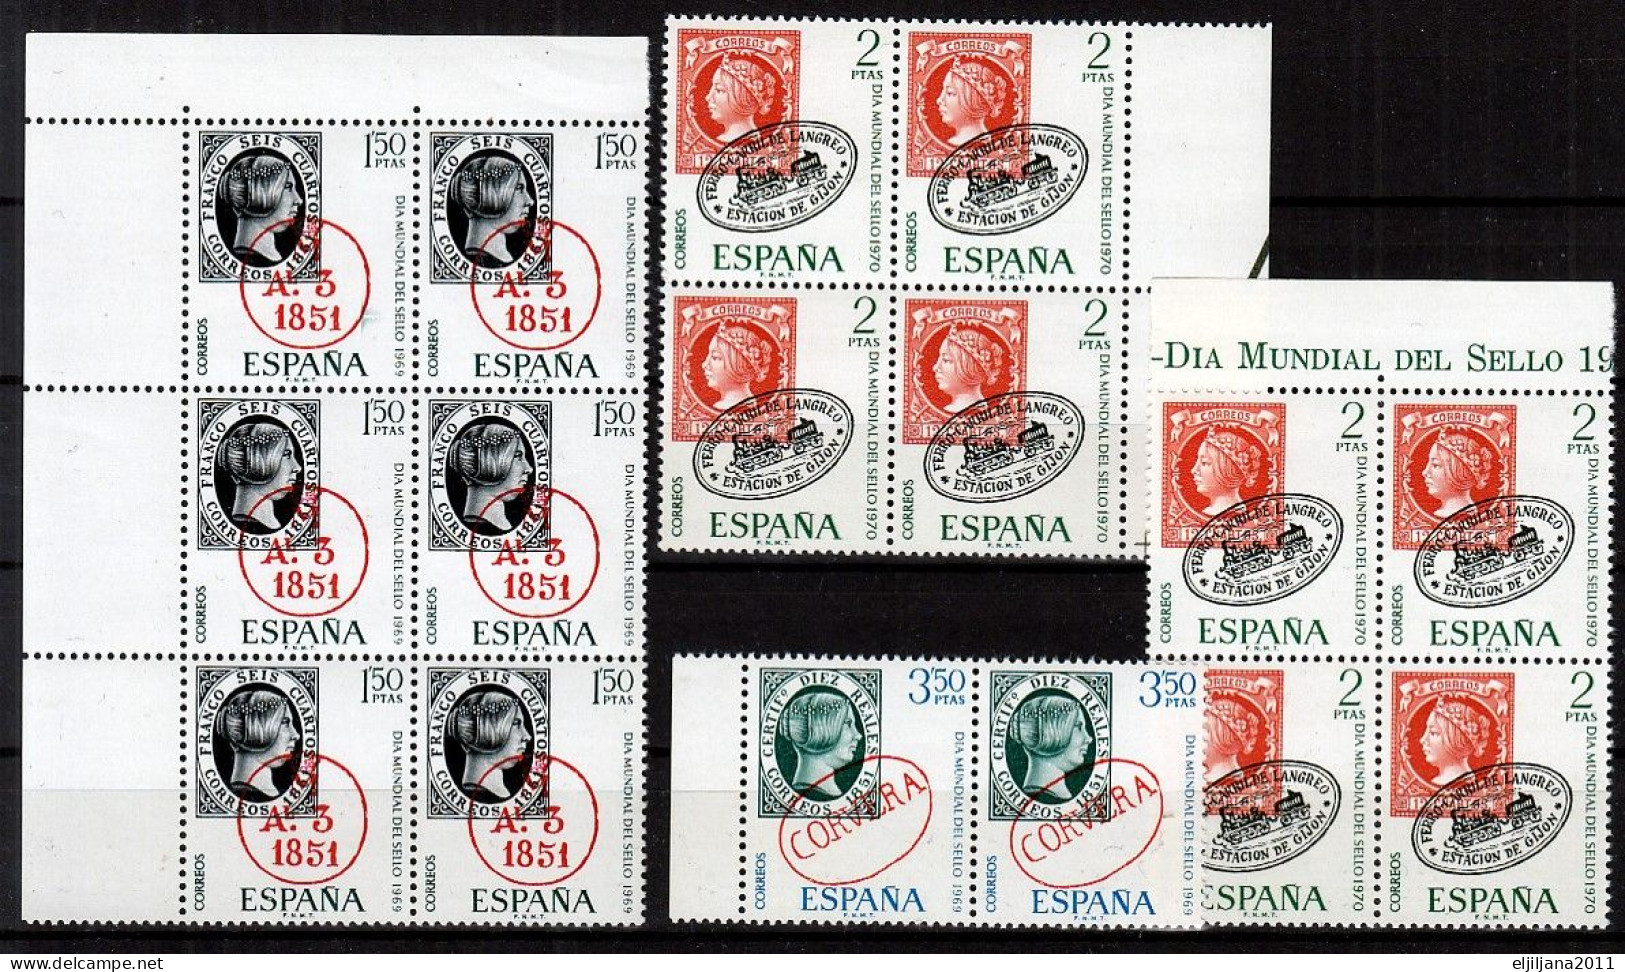 ⁕ SPAIN / ESPANA 1969 - 1970 ⁕ World Stamp Day Mi.1809/10 & Mi.1861 ⁕ 16v MNH - Nuevos